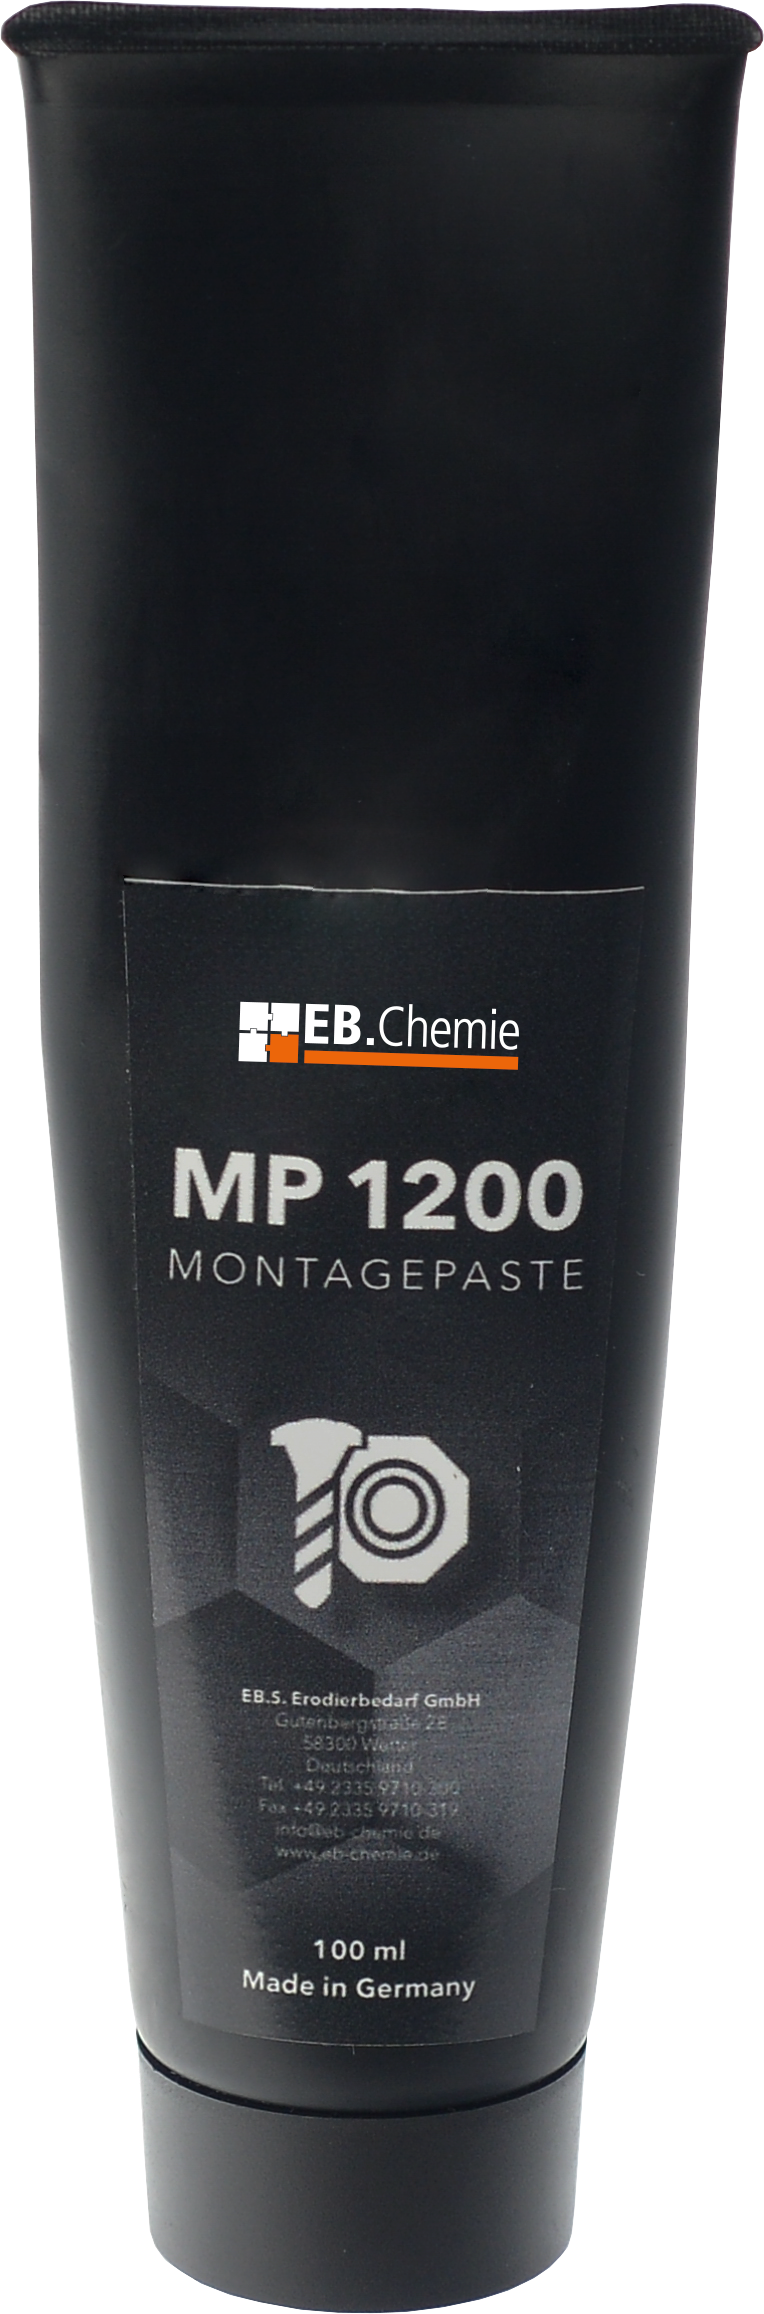 MP1200 - Montagepaste